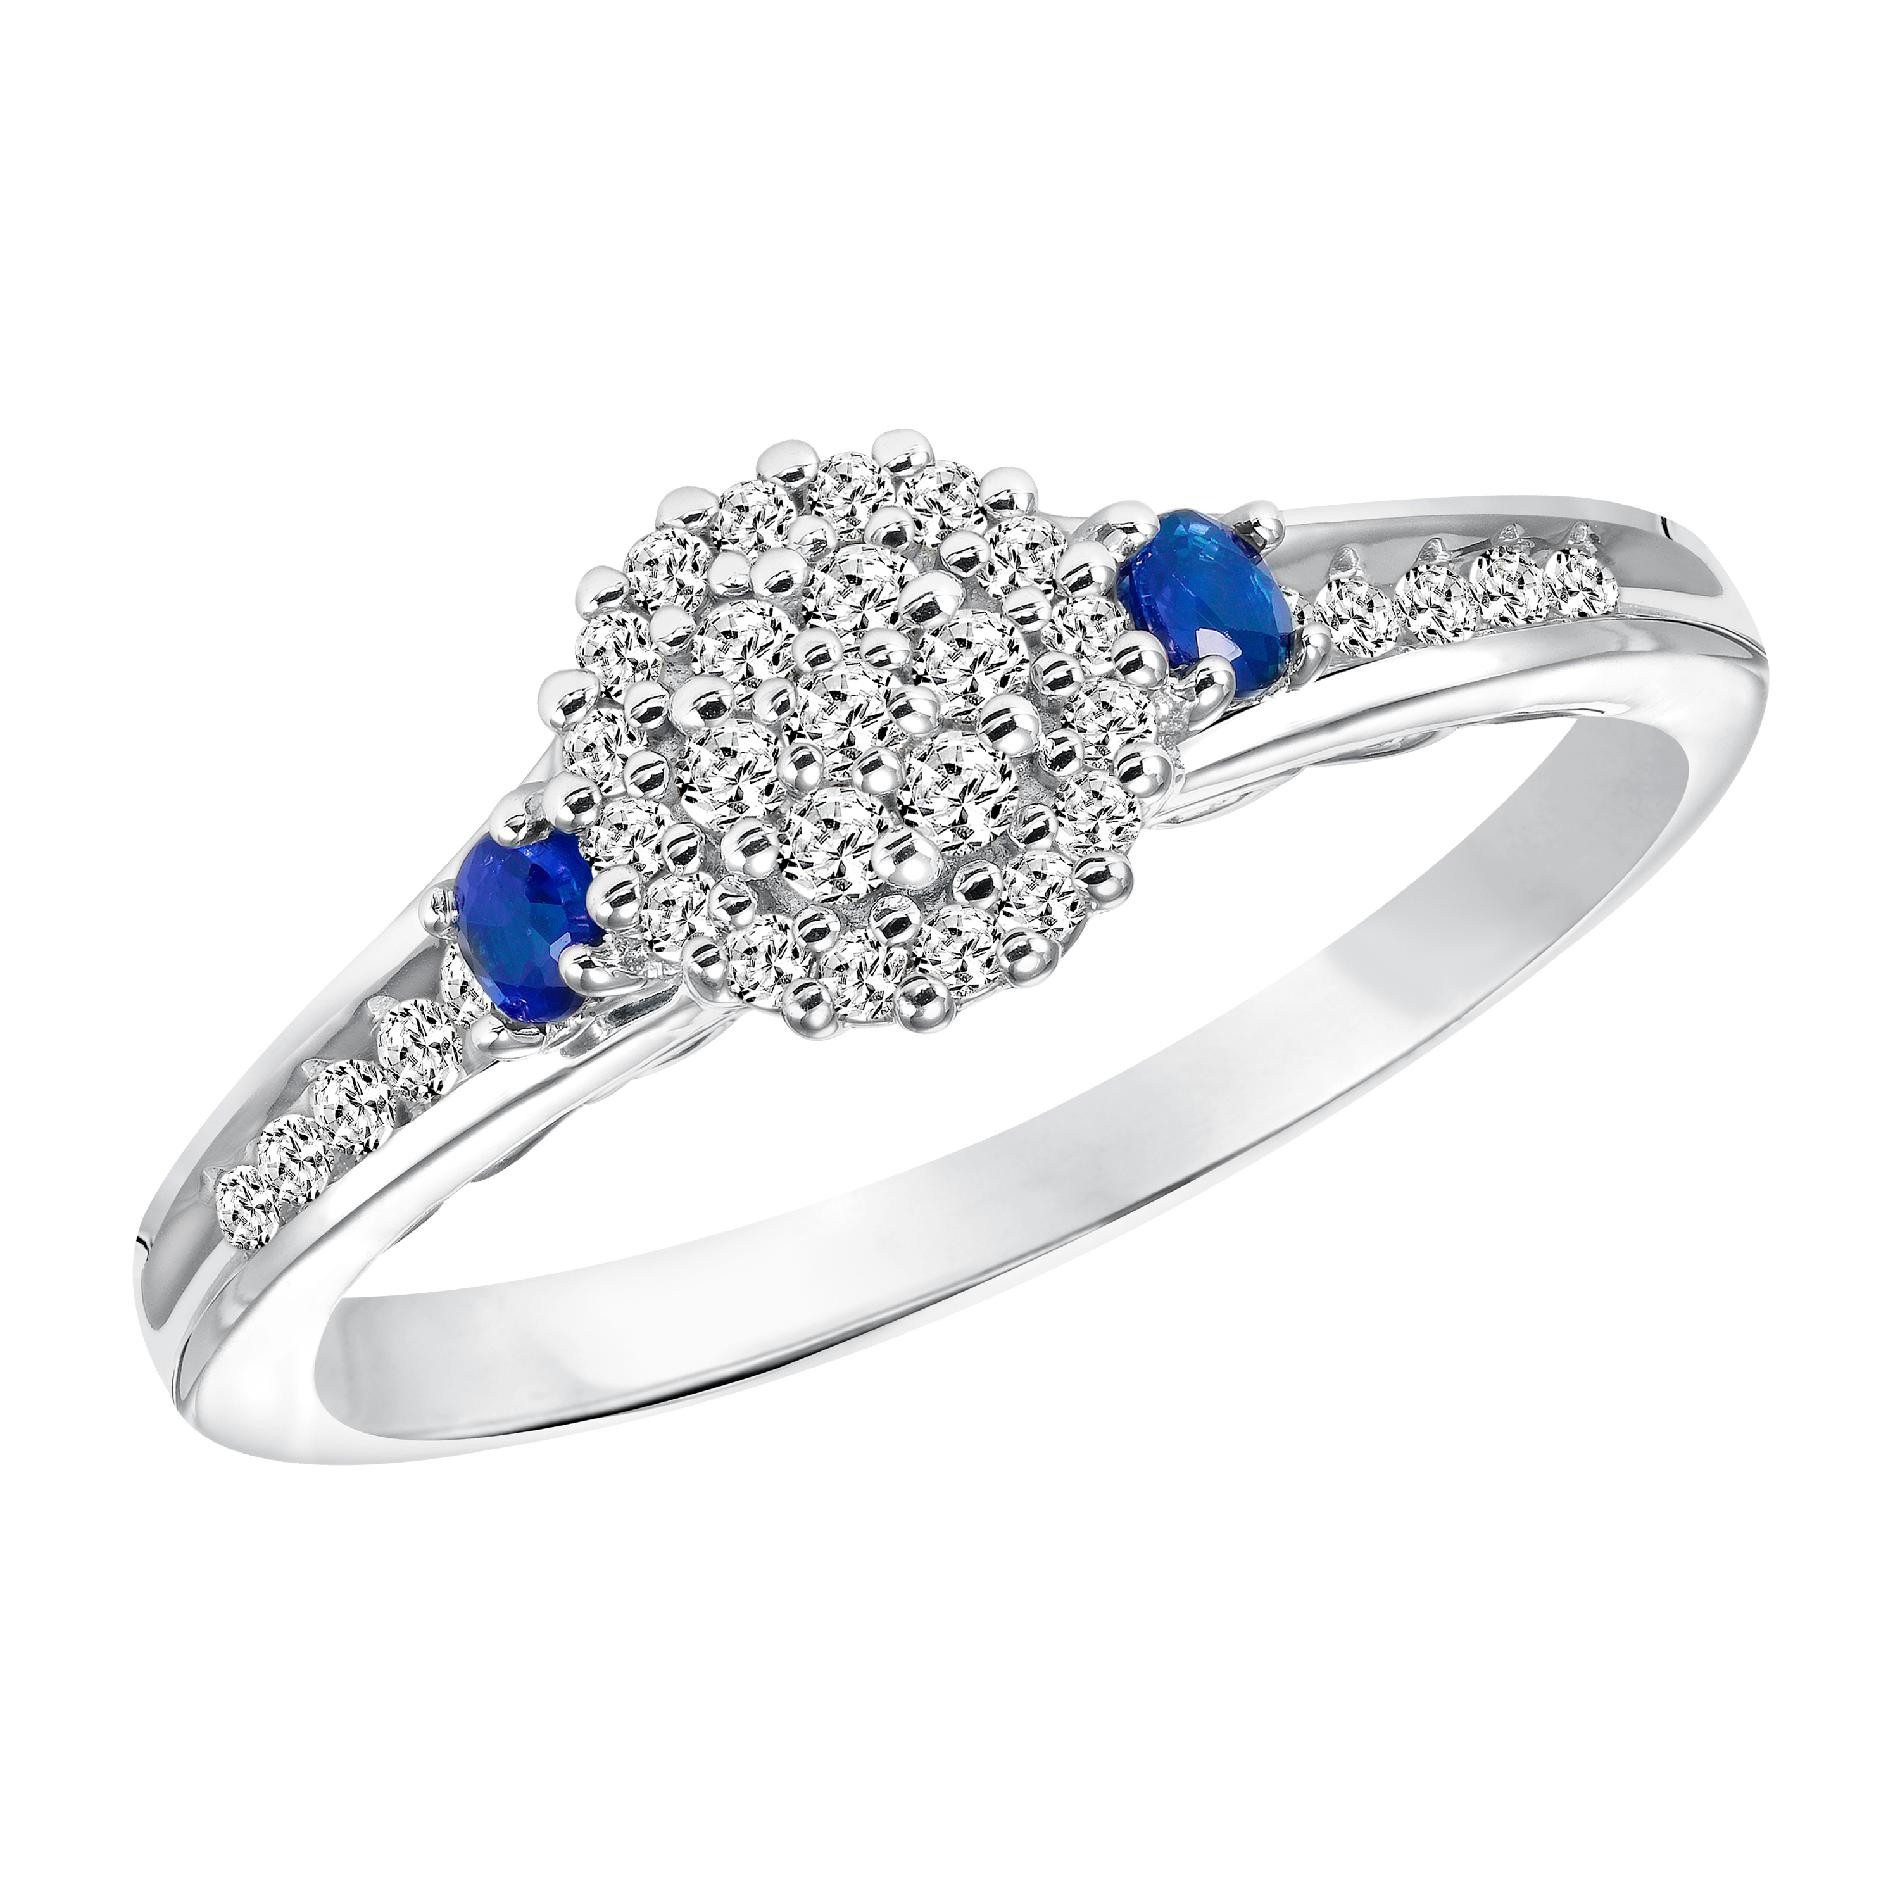 Kmart Wedding Rings
 Engagement Rings